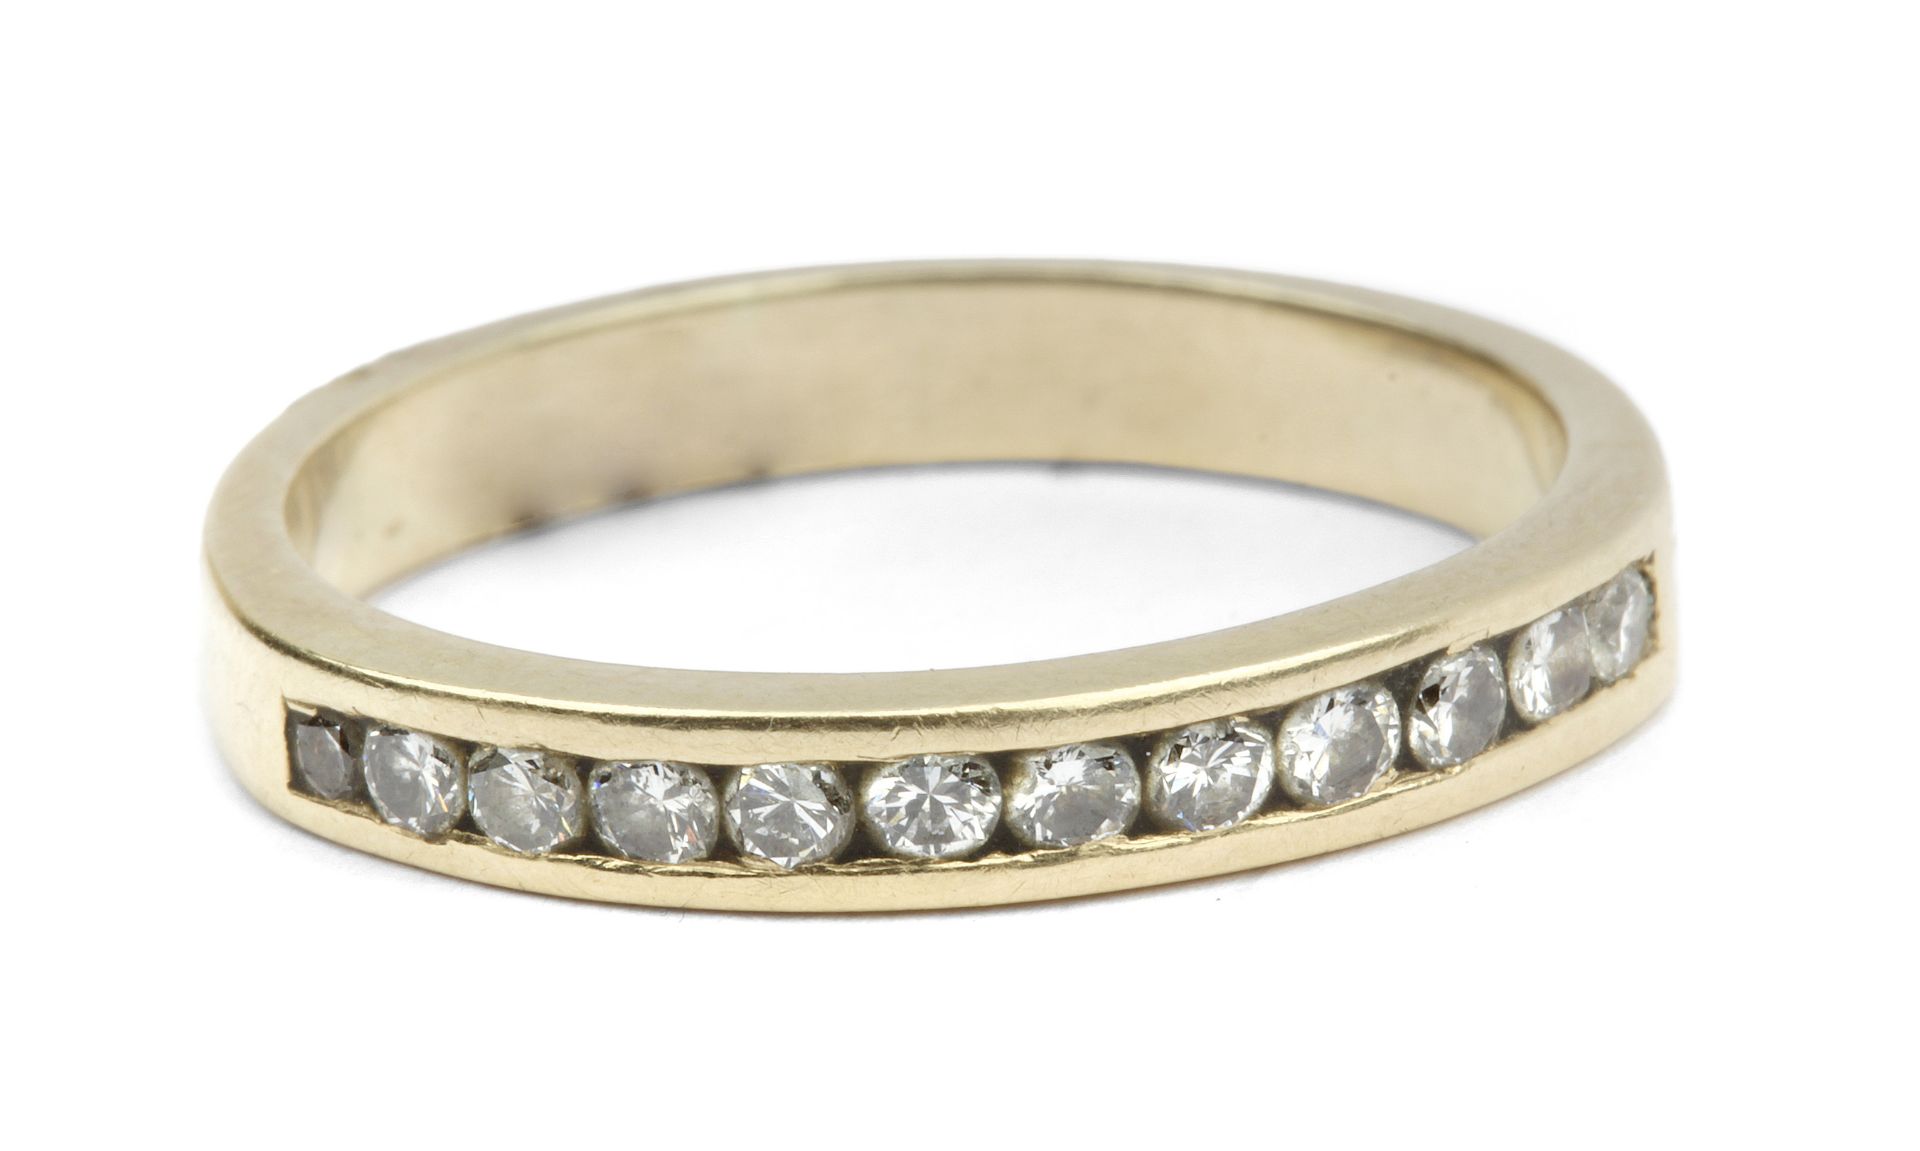 Brilliant cut diamonds half eternity ring with an 18k yellow gold setting